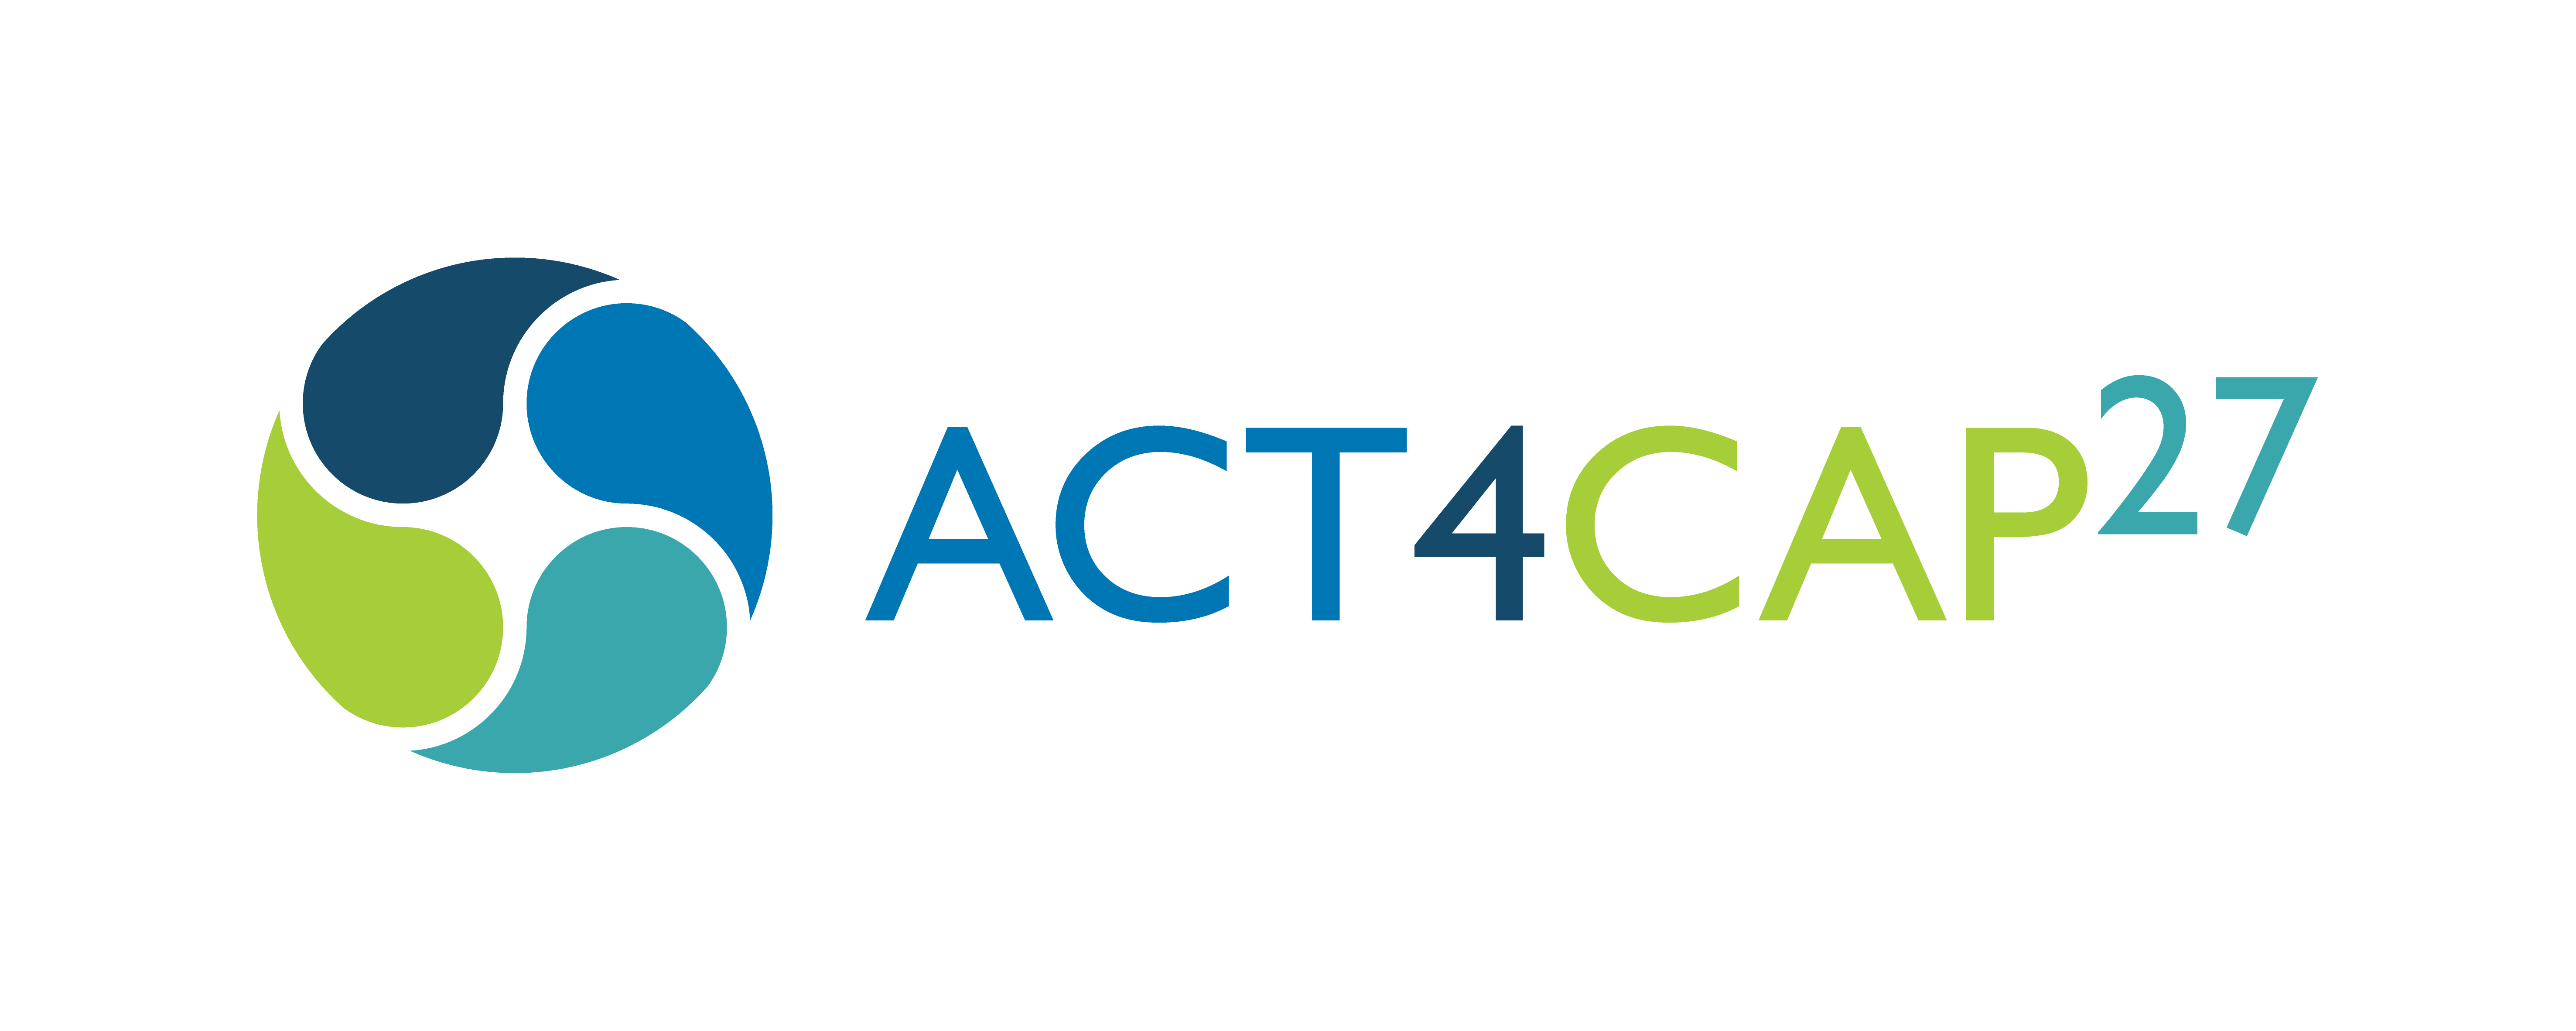 ACT4CAP27 logo horizontal RGB